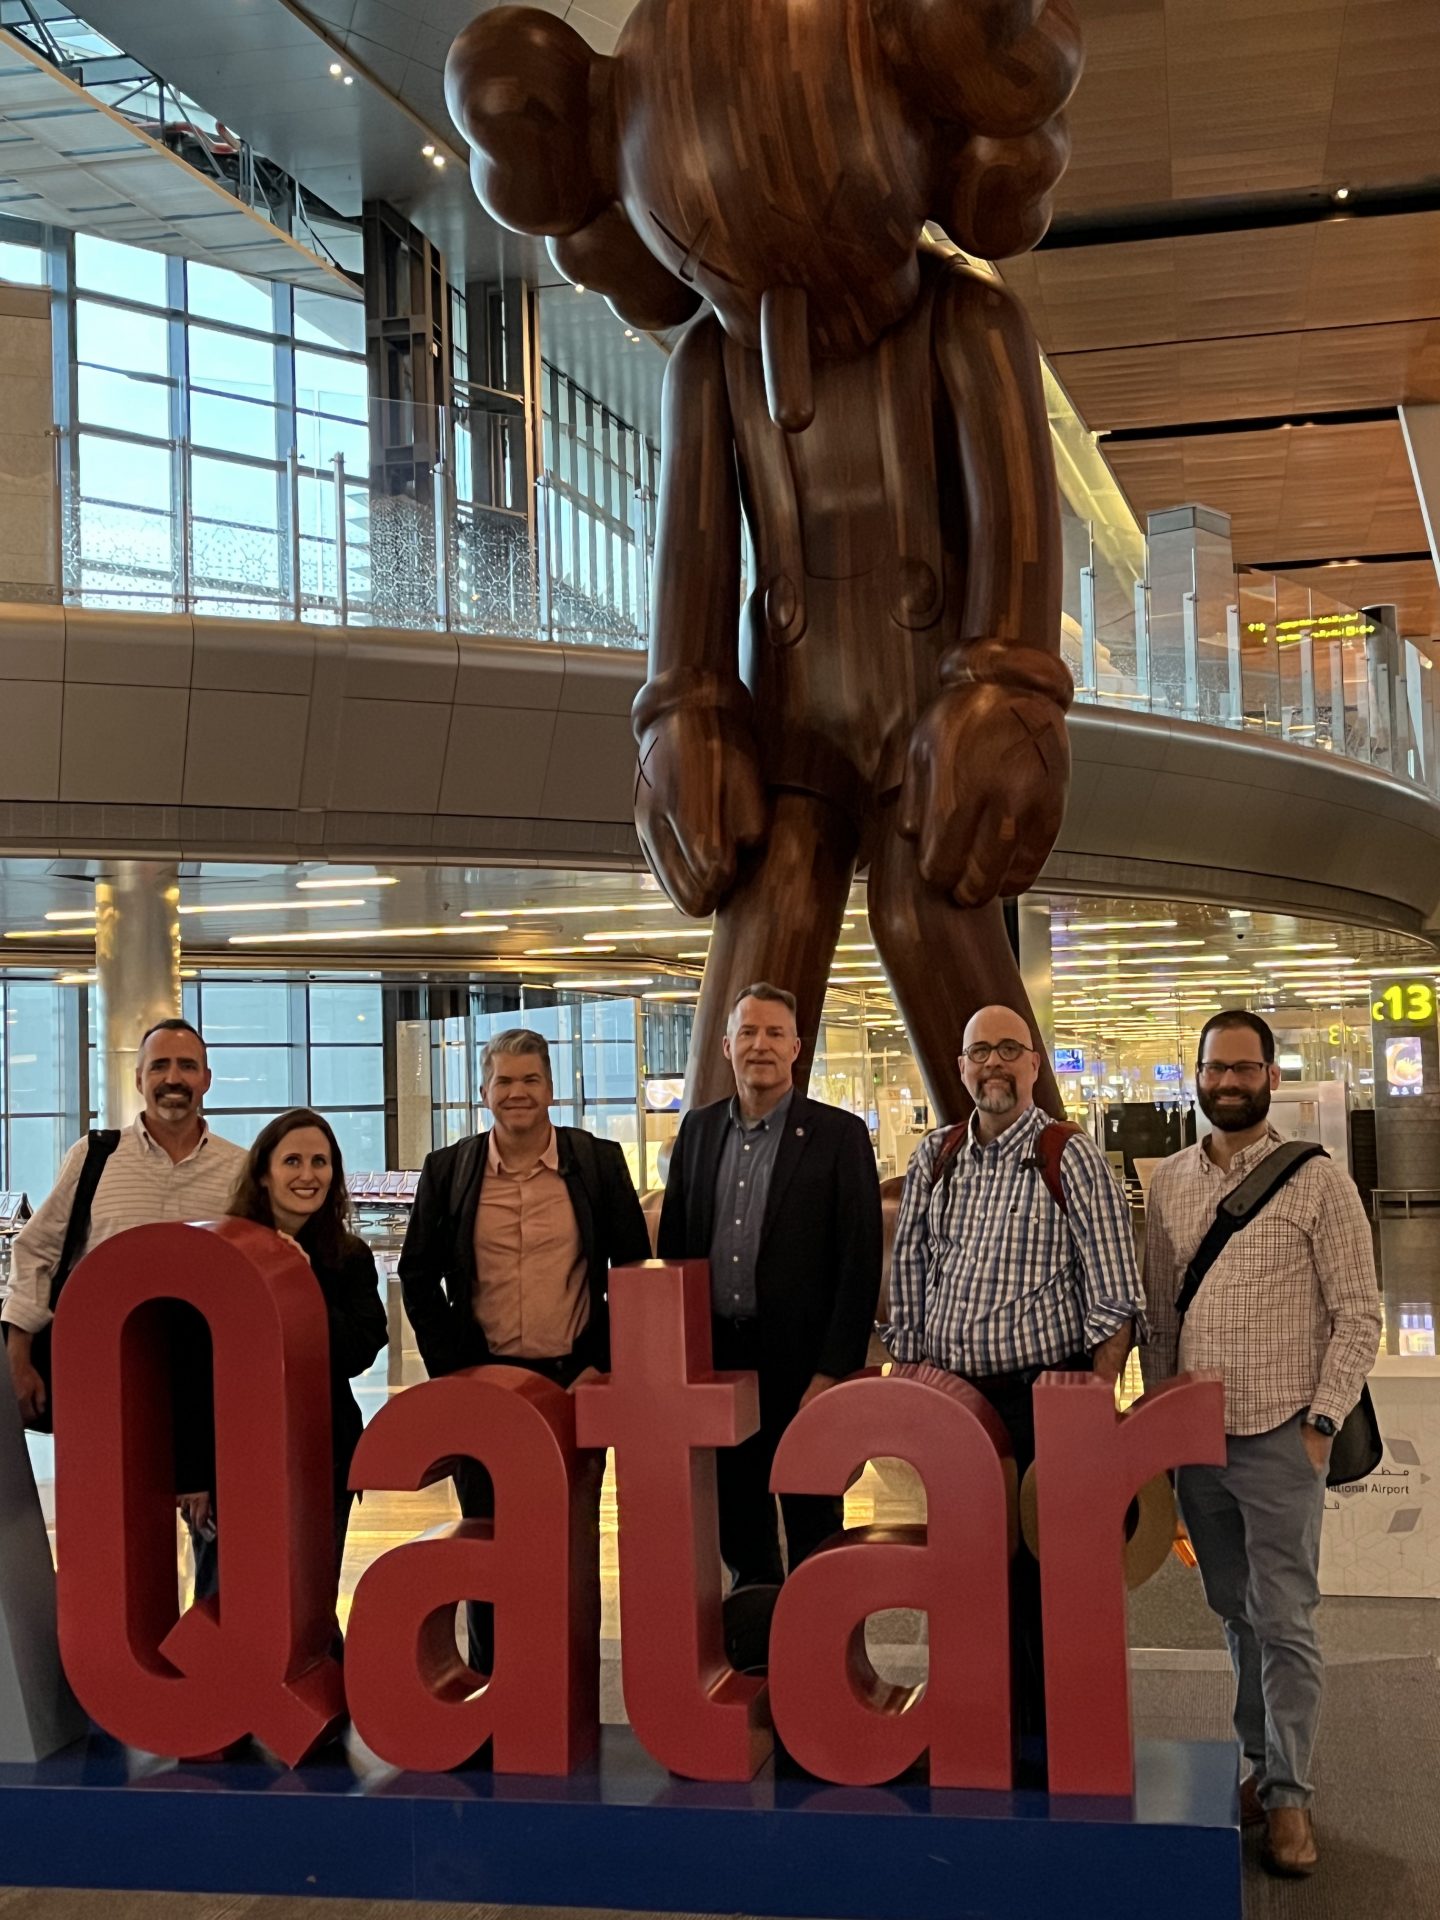 Mike McDonald, Jessica Jones, Alex Farmer, Chris McCarthy, Keith Allen, and Samuel Horowitz in the airport in Doha, Qatar.